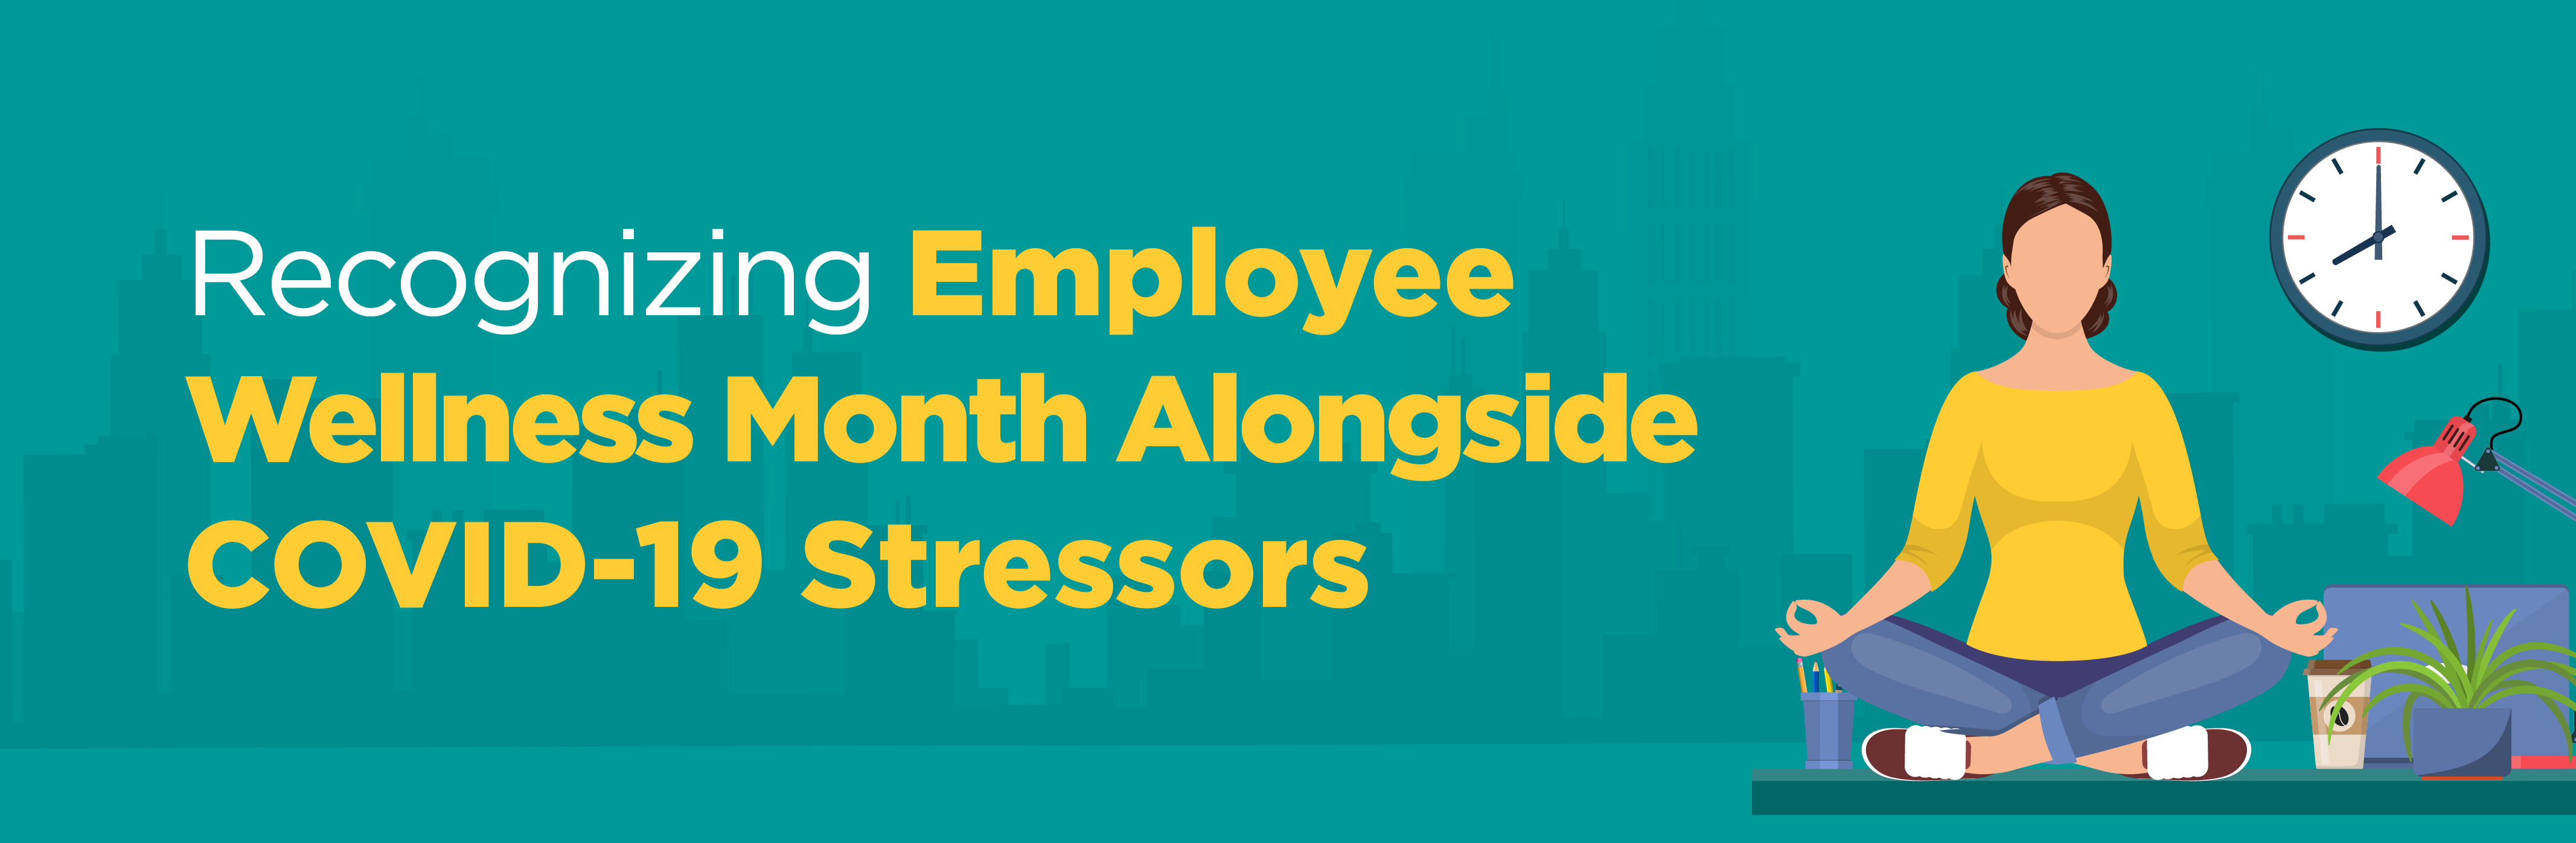 Recognizing Employee Wellness Month Alongside COVID-19 Stressors